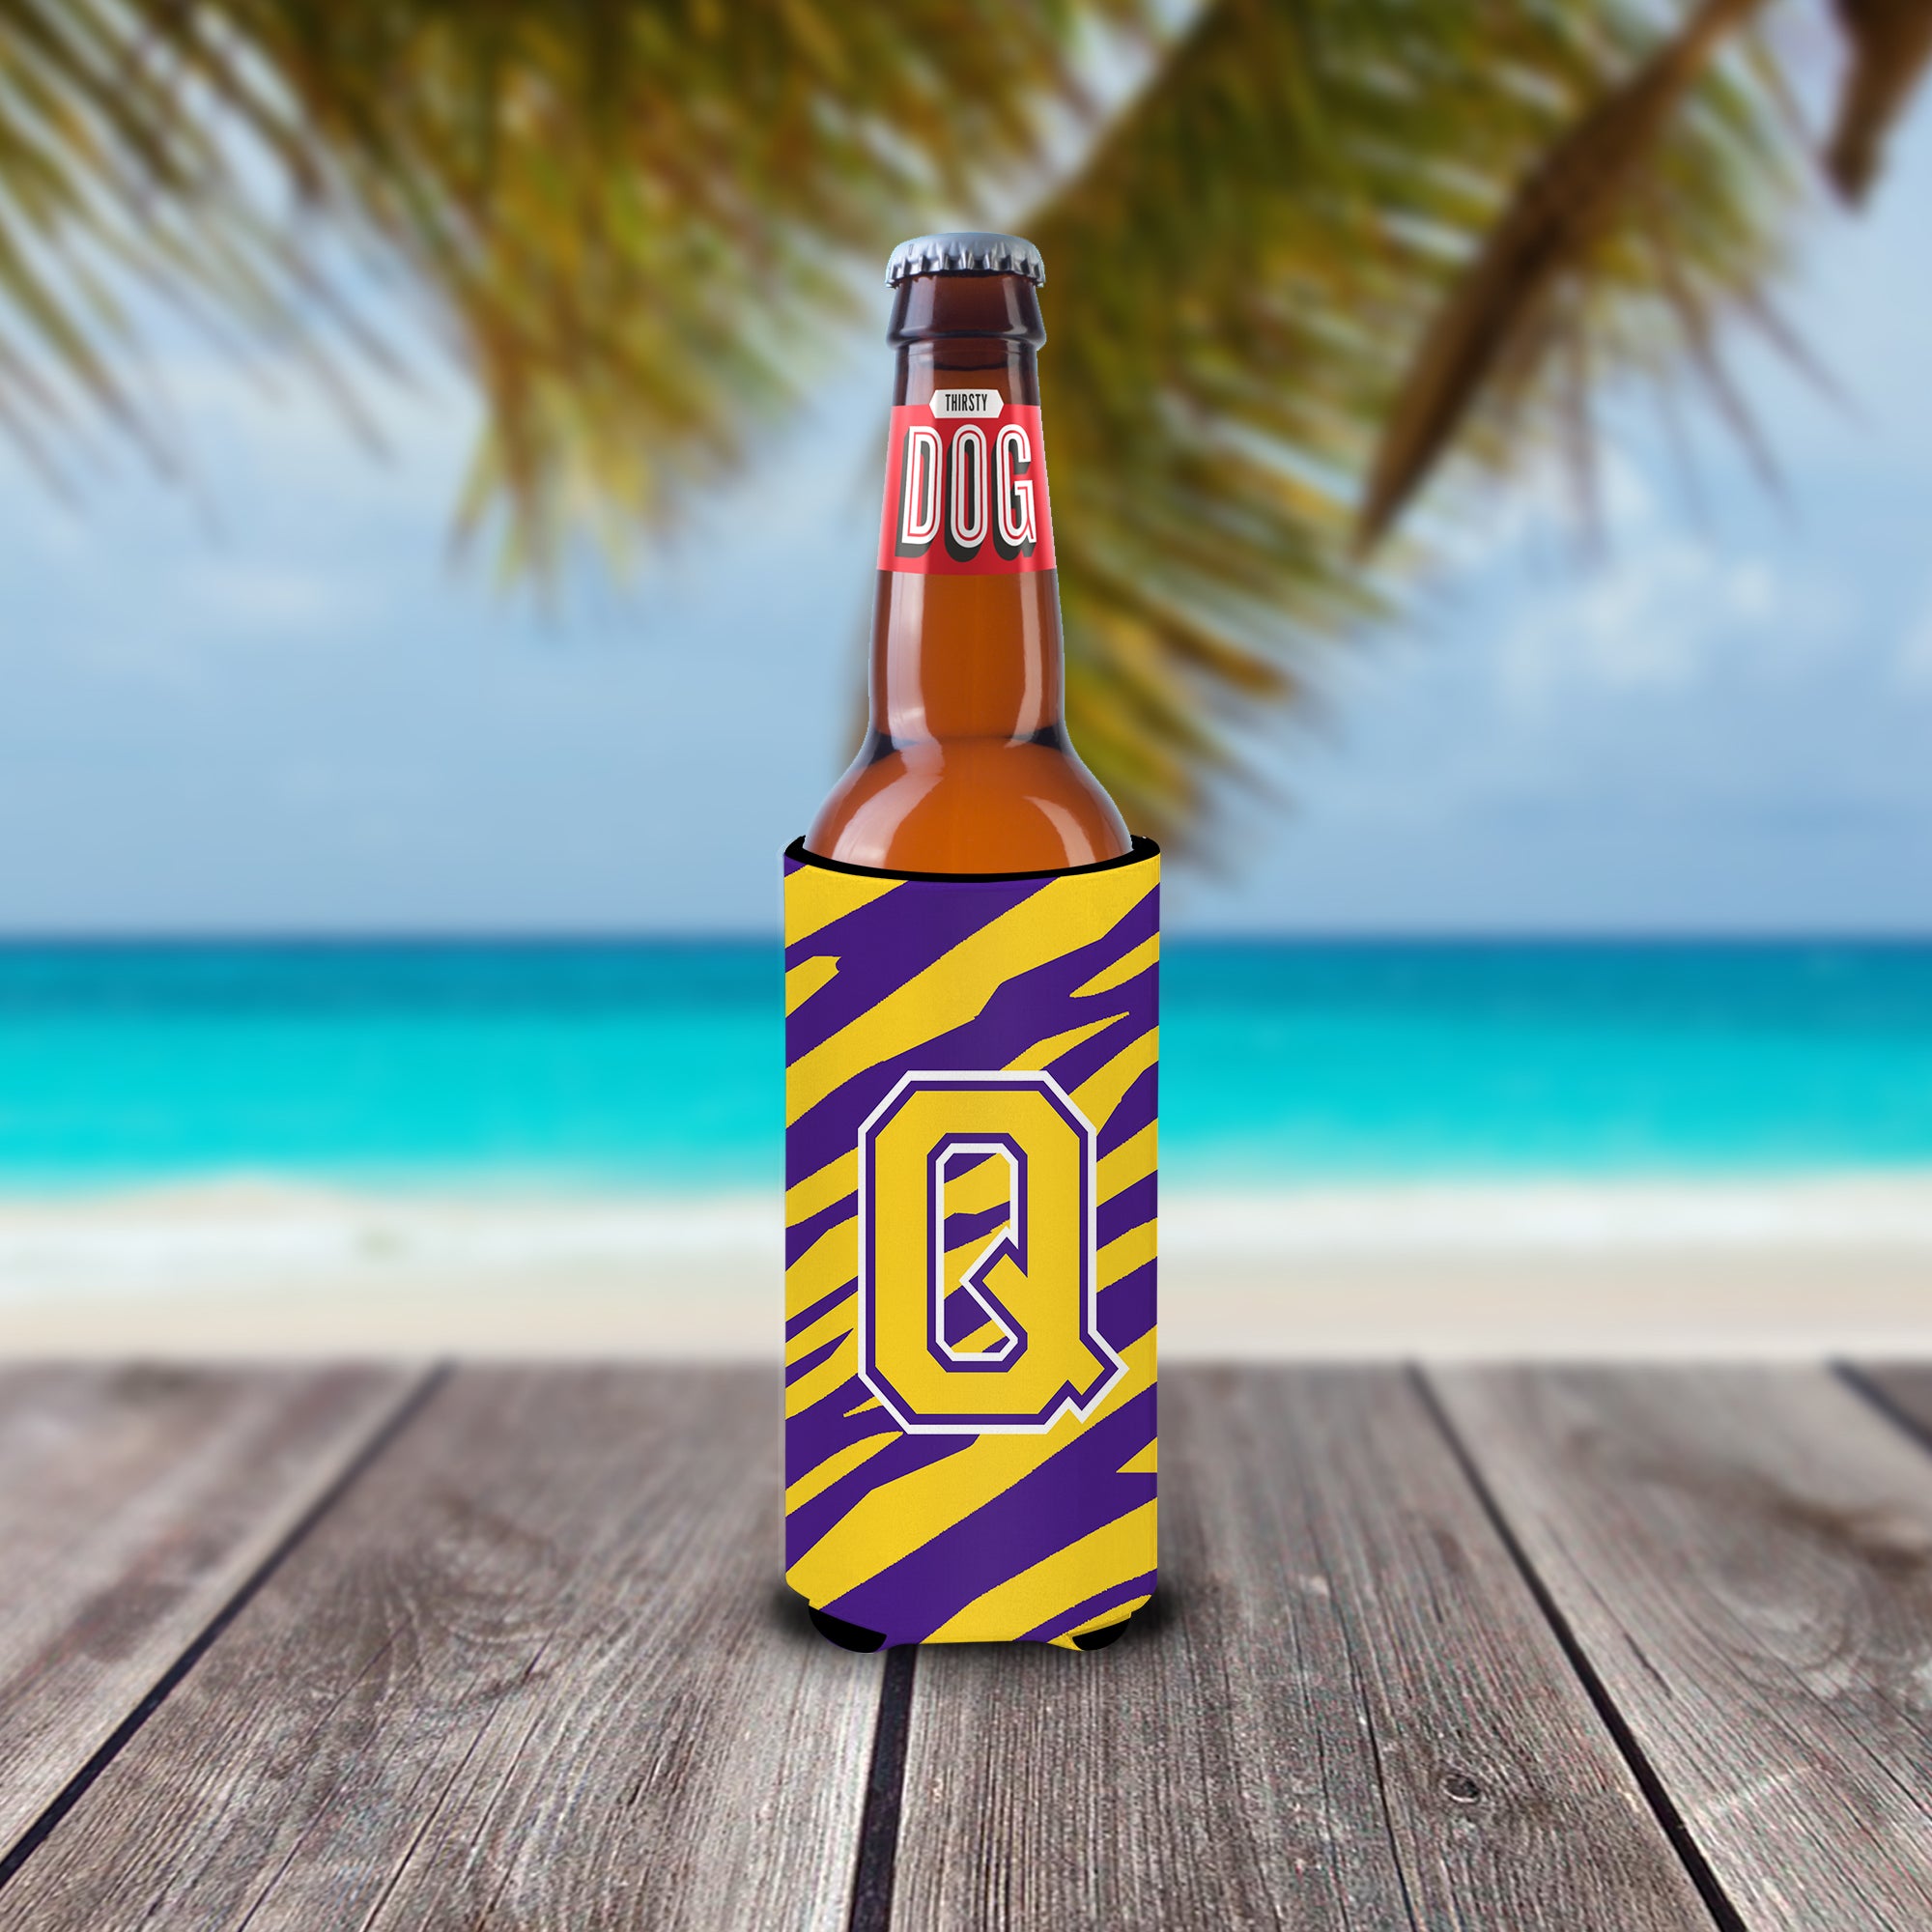 Monogram - Tiger Stripe - Purple Gold  Letter Q Ultra Beverage Insulators for slim cans CJ1022-QMUK.